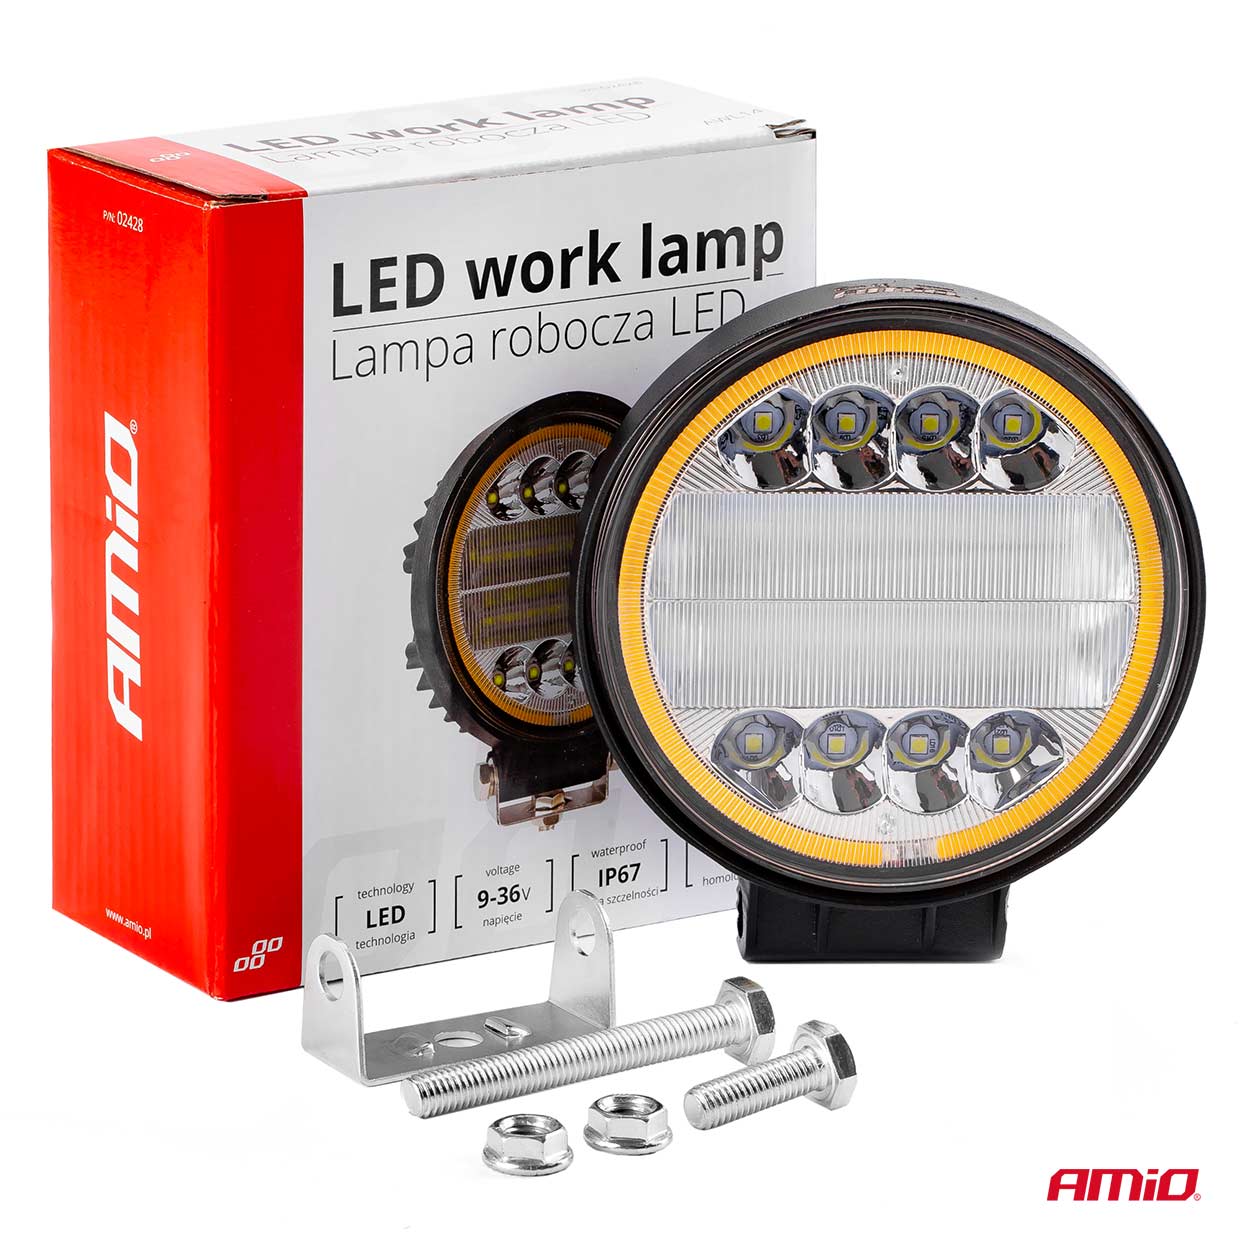 Working lamp AWL14 42 LED COMBO (2 Functions) 9-36V thumb